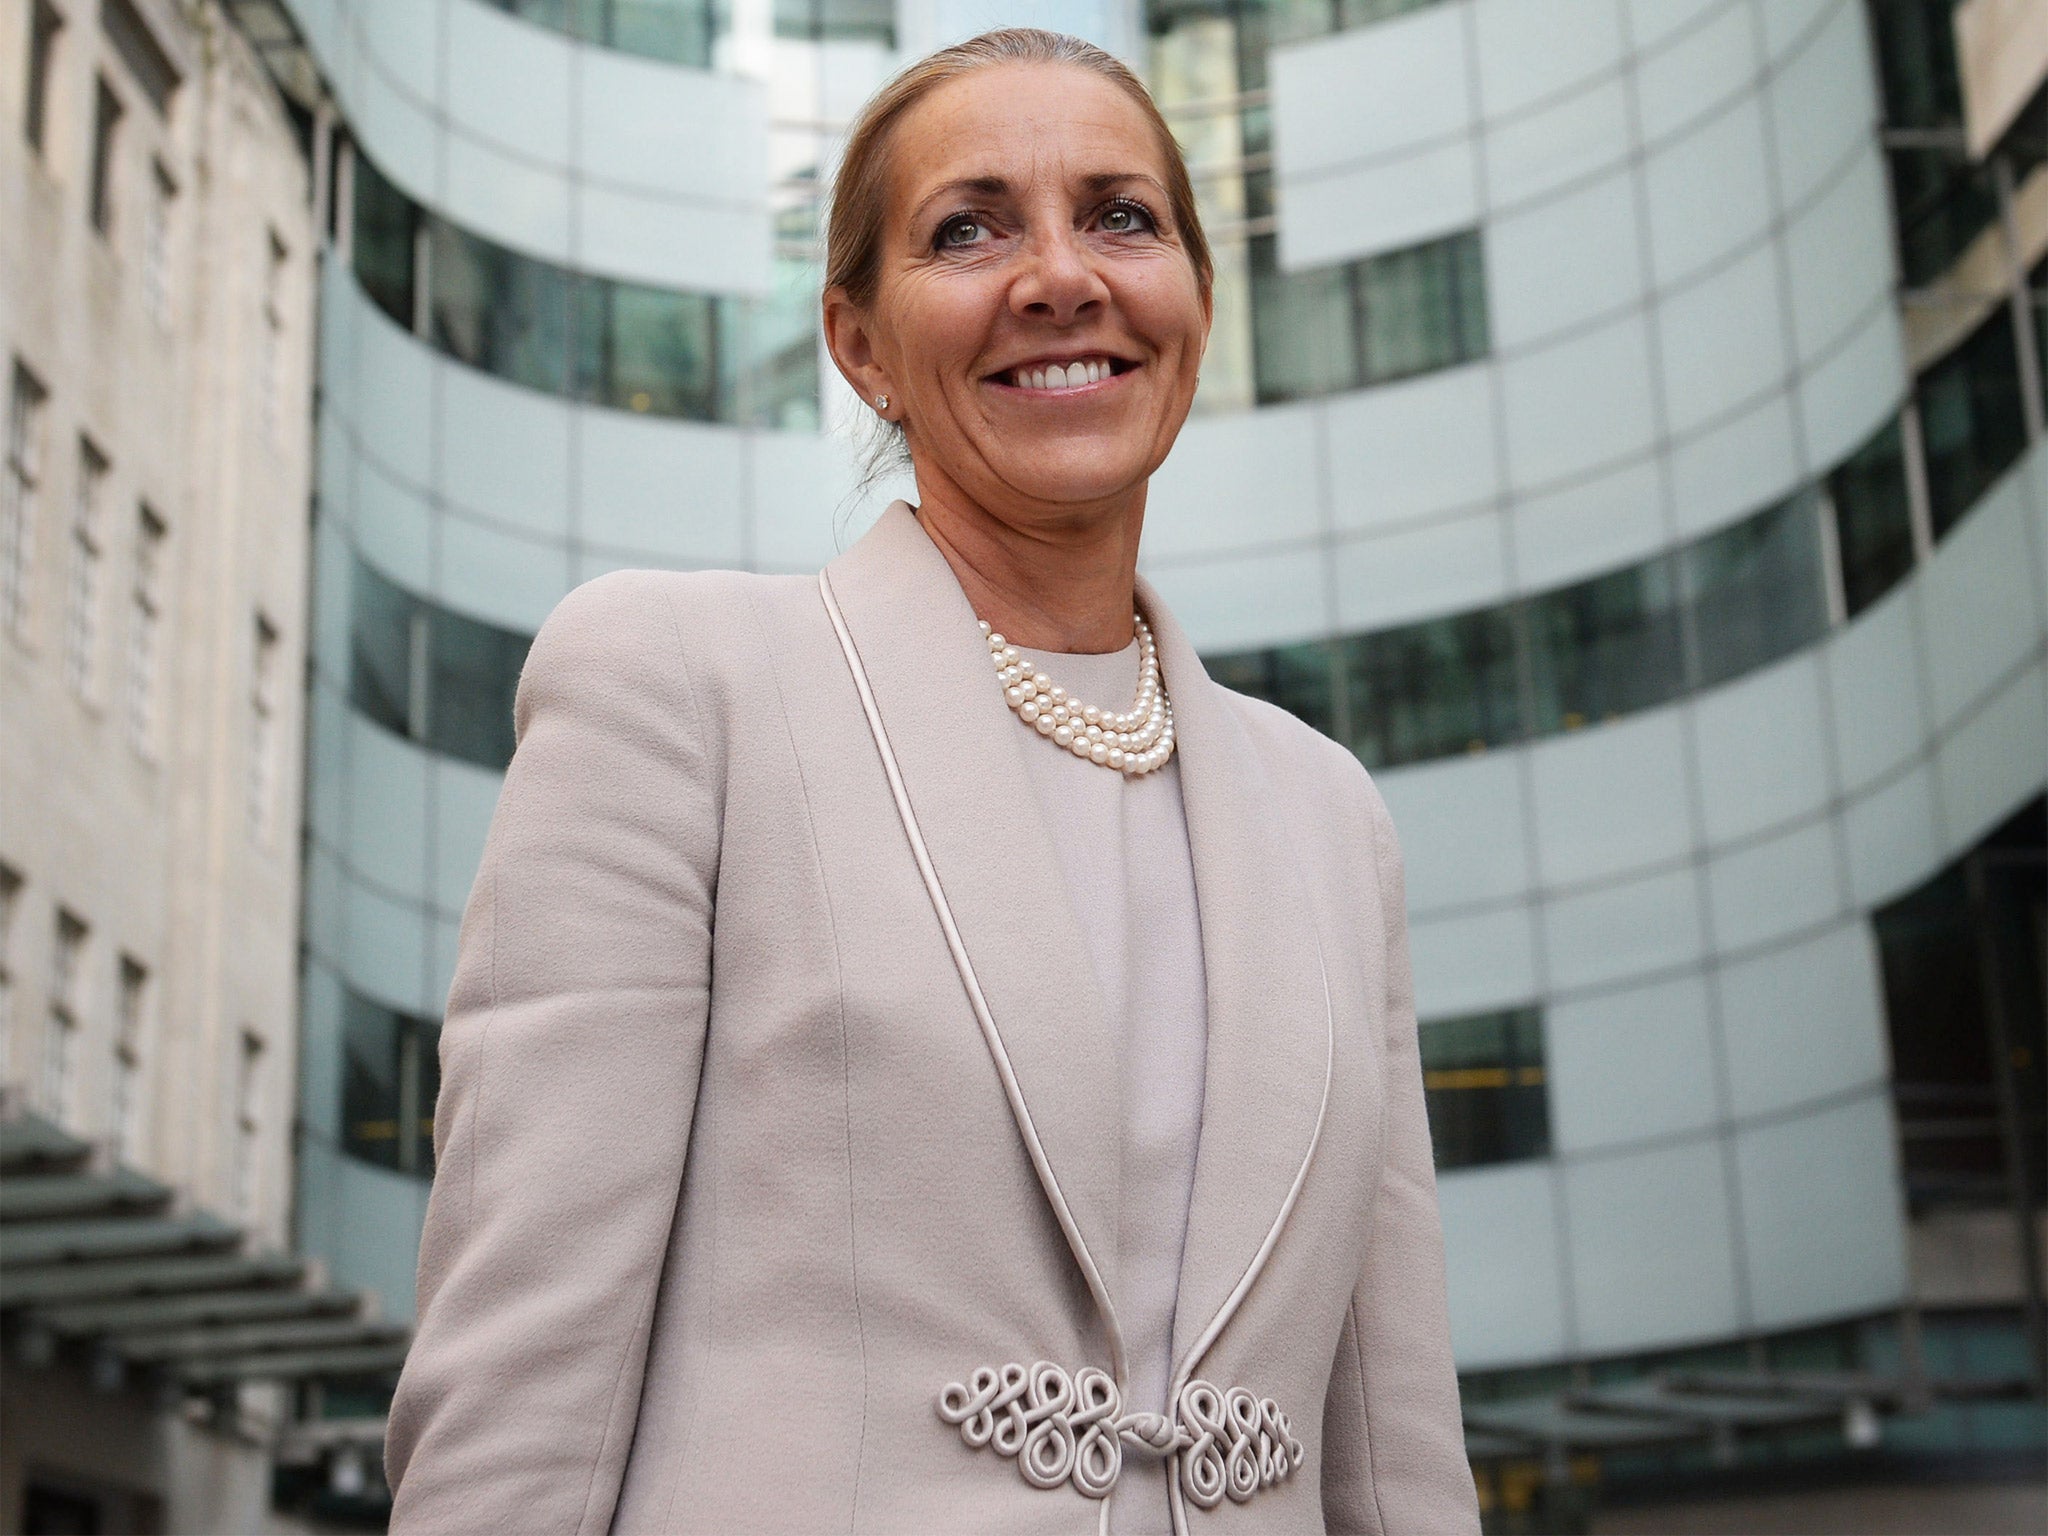 The BBC Trust Chairman Rona Fairhead